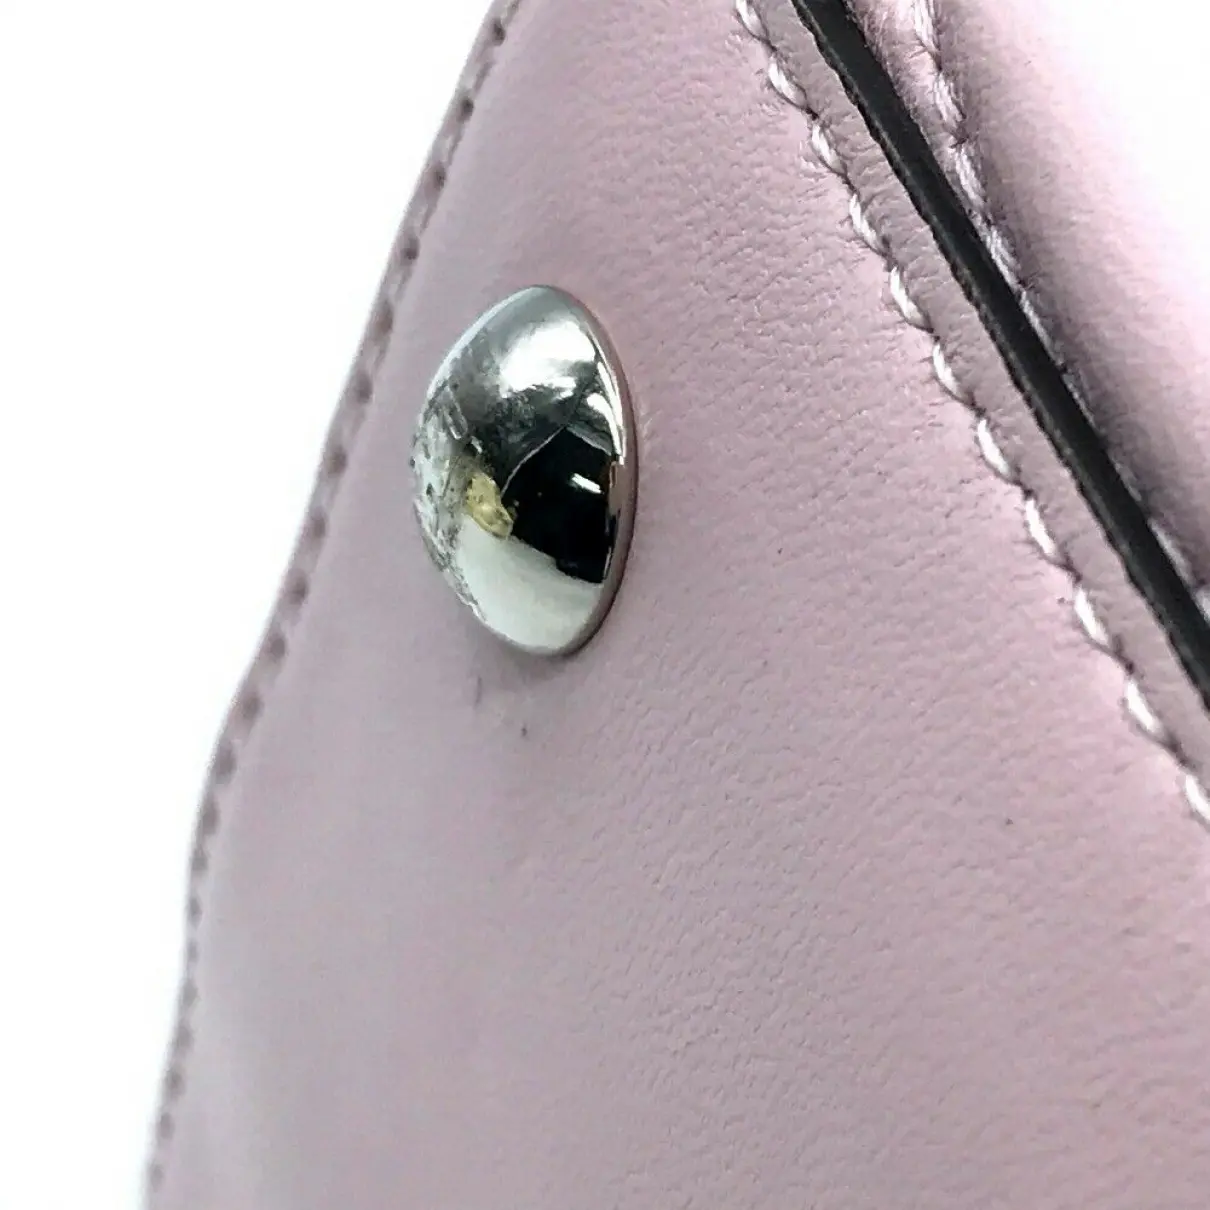 Dot Com leather handbag Fendi